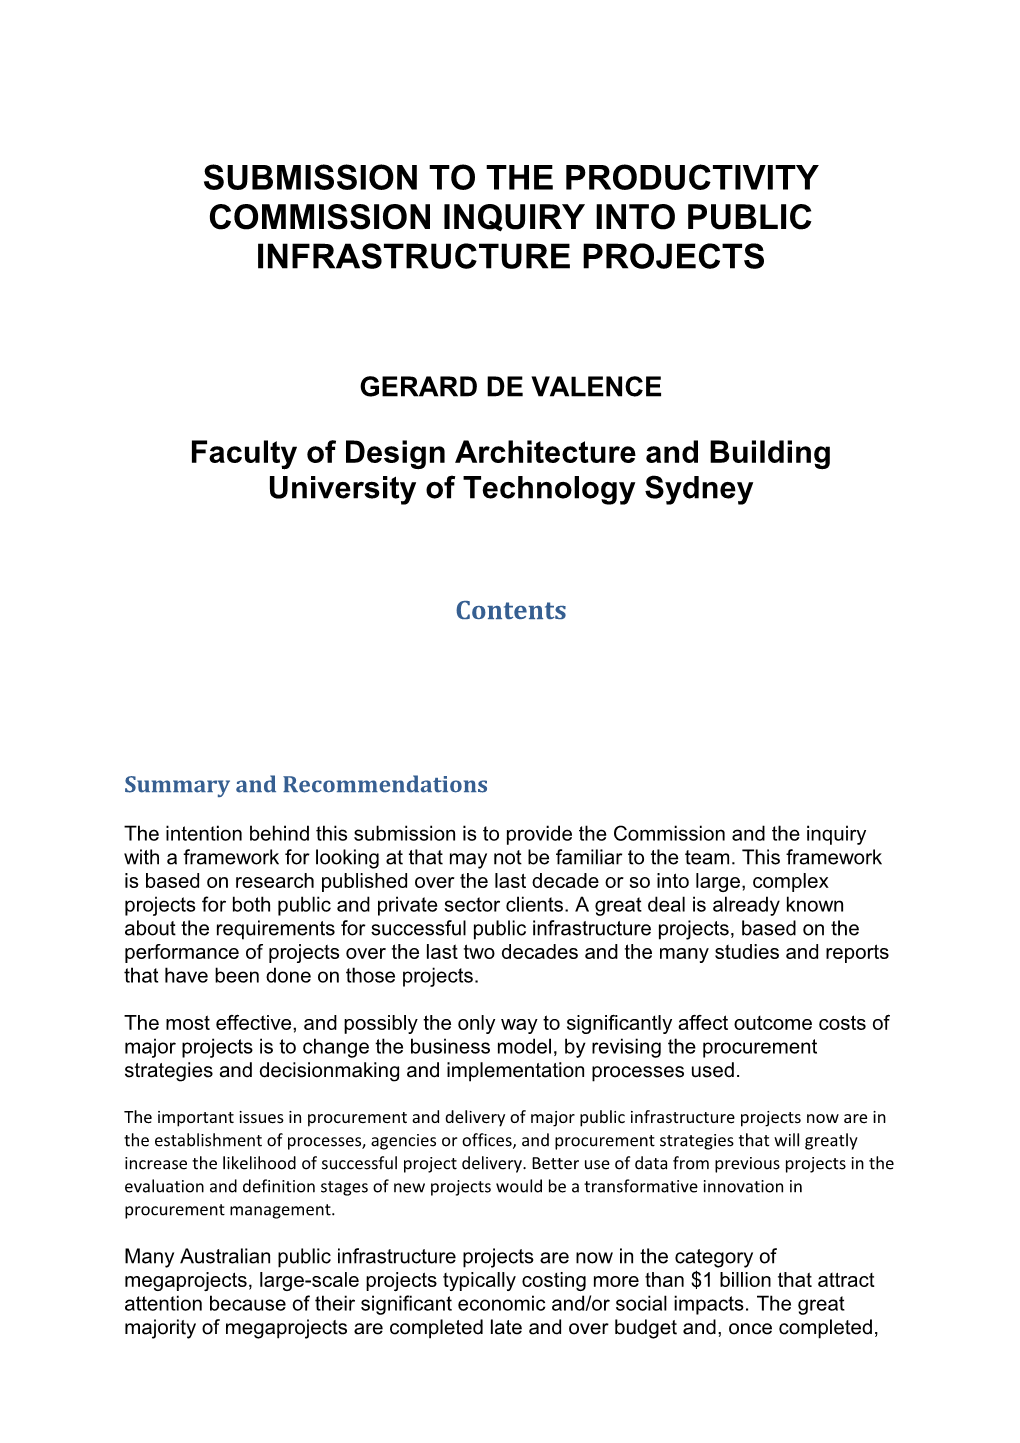 Submission 16 - Gerard De Valence - Public Infrastucture Public Inquiry